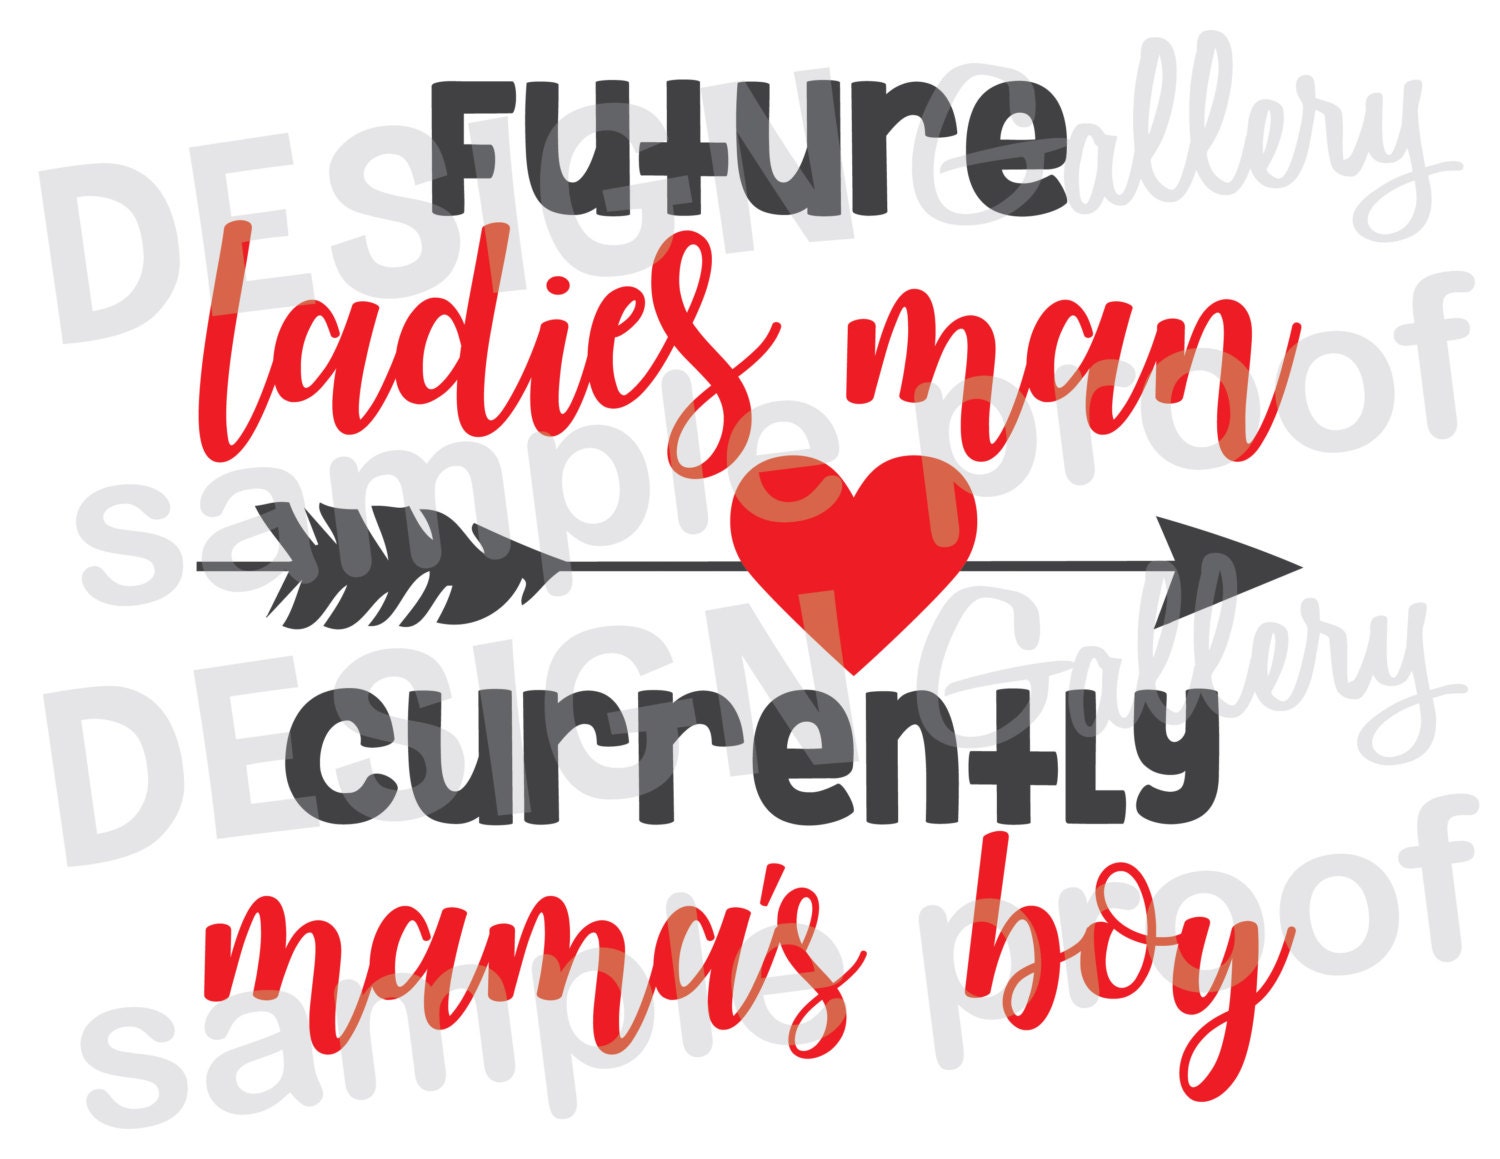 Download Future Ladies Man Currently Mama's Boy JPG & SVG DXF cut